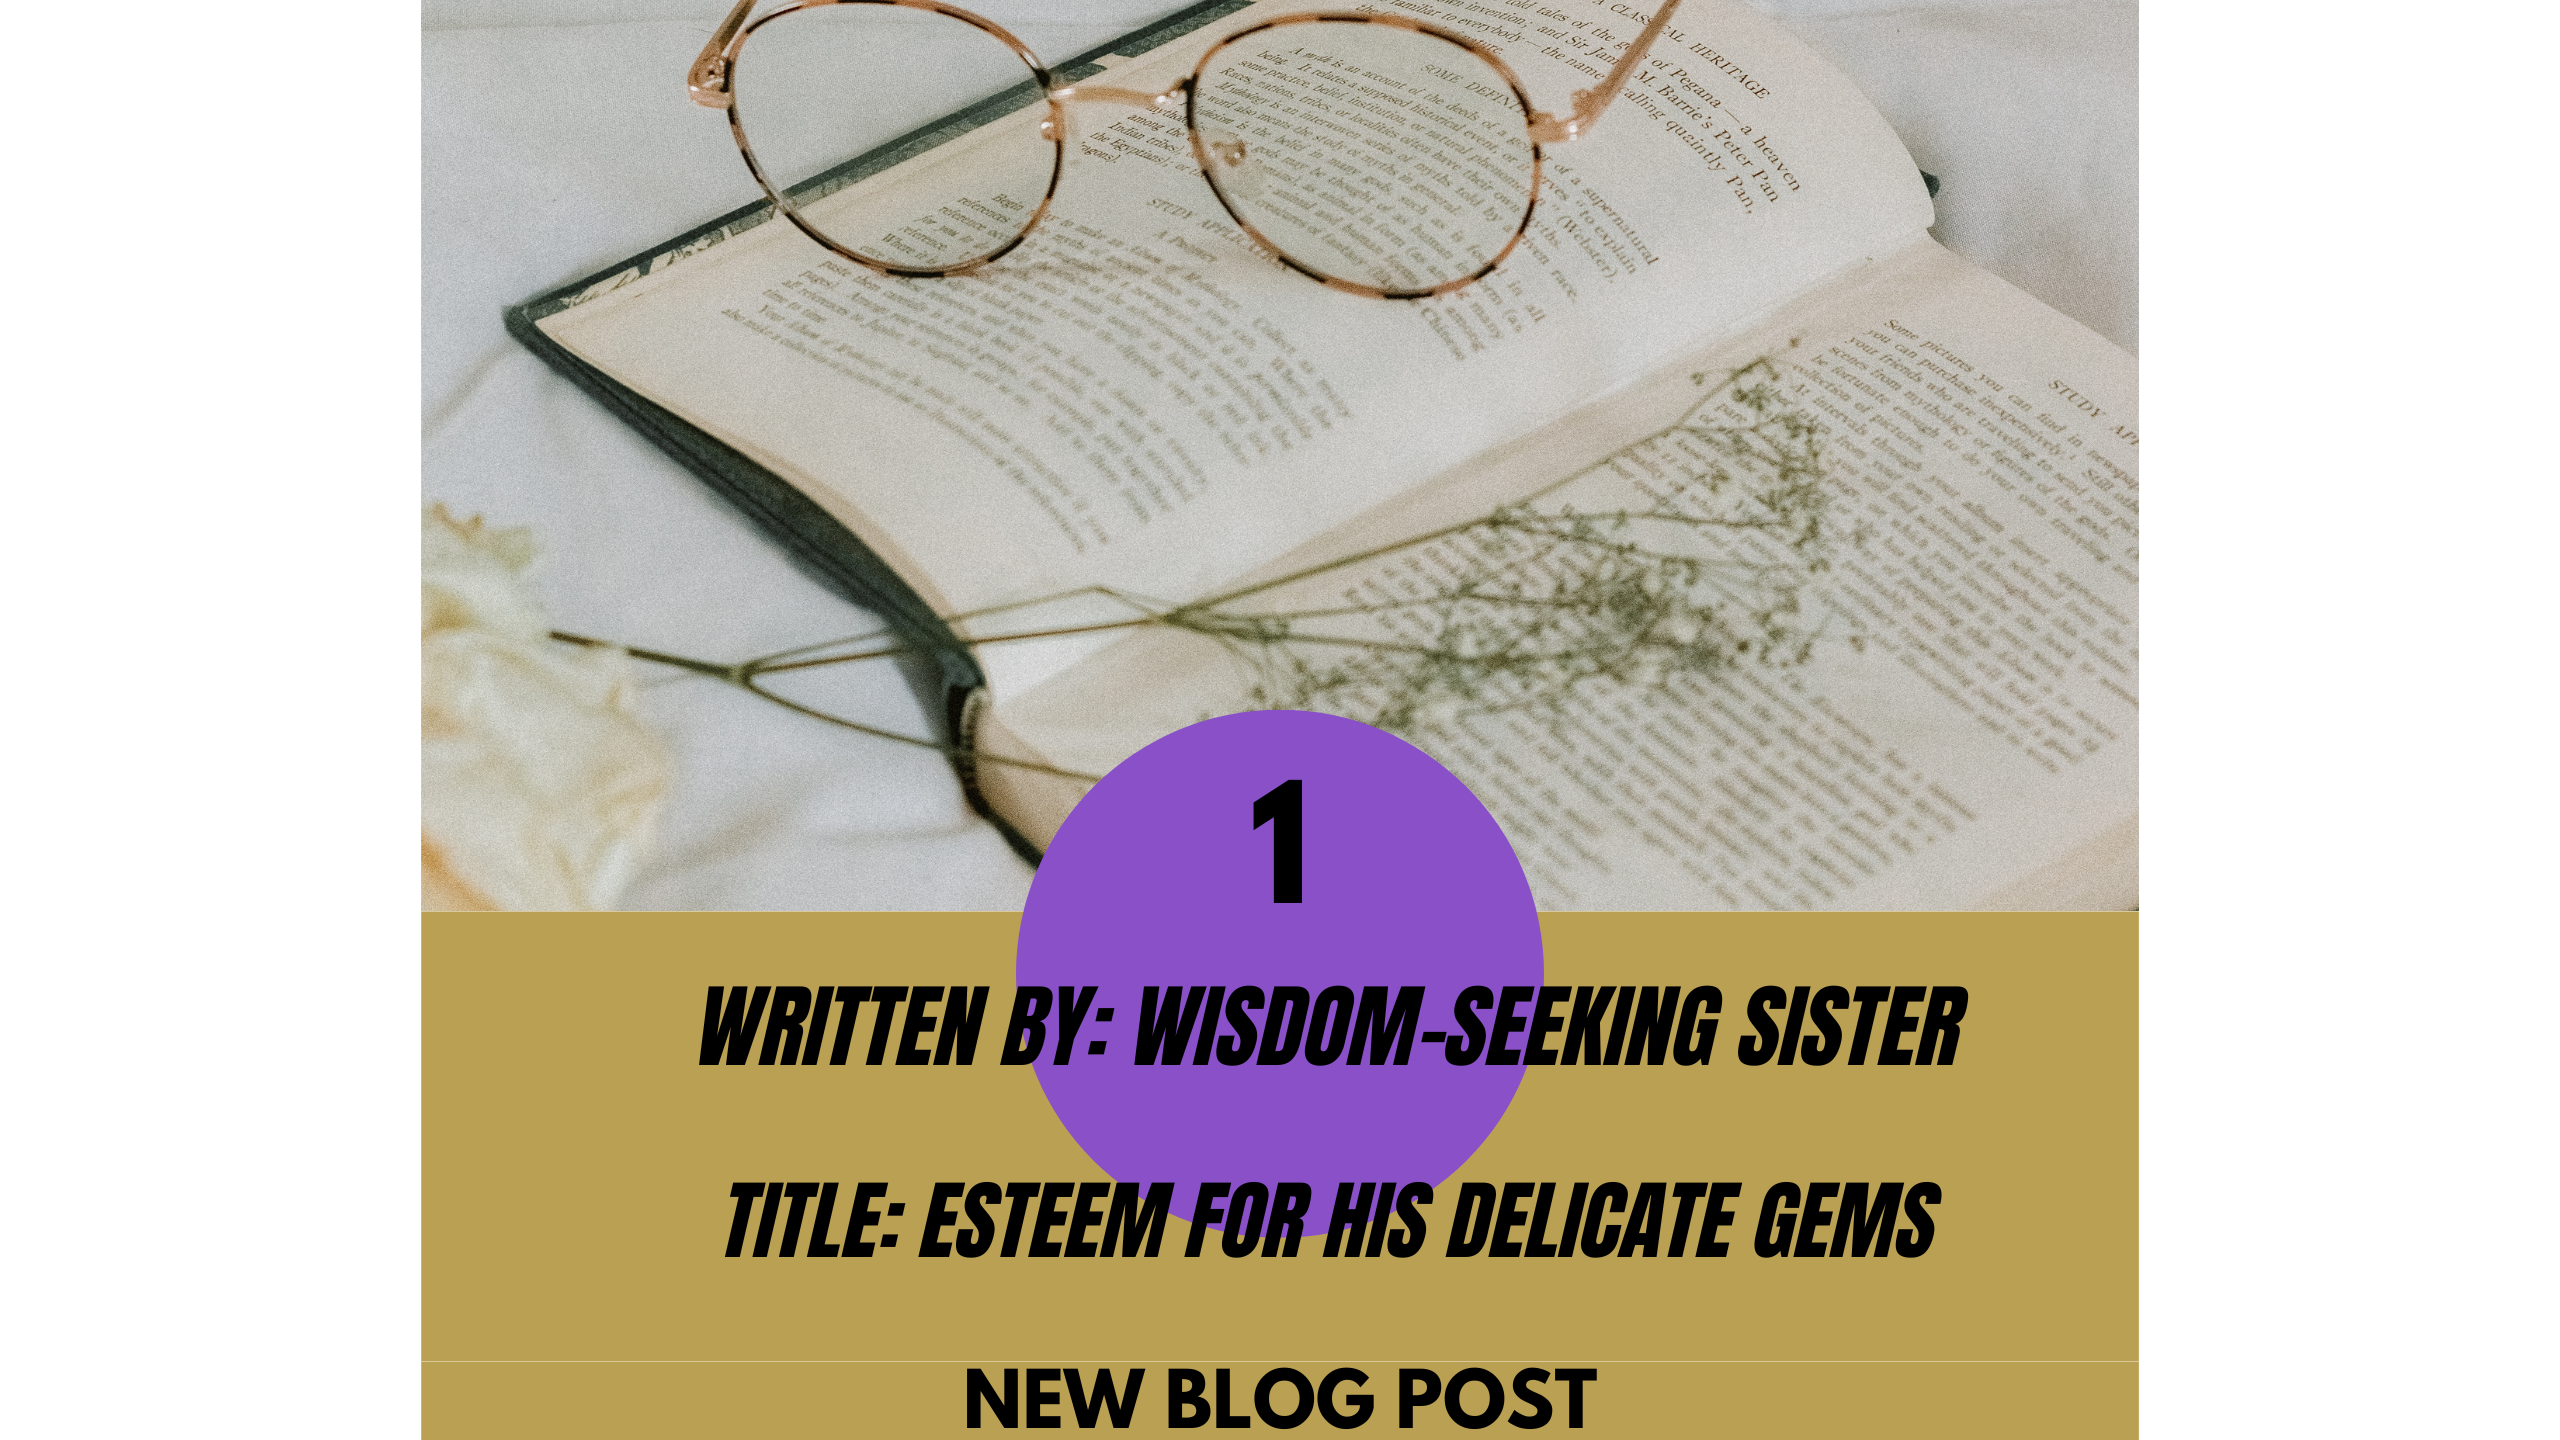 Esteem for His Delicate Gems "Wisdom-Seeking Sister"